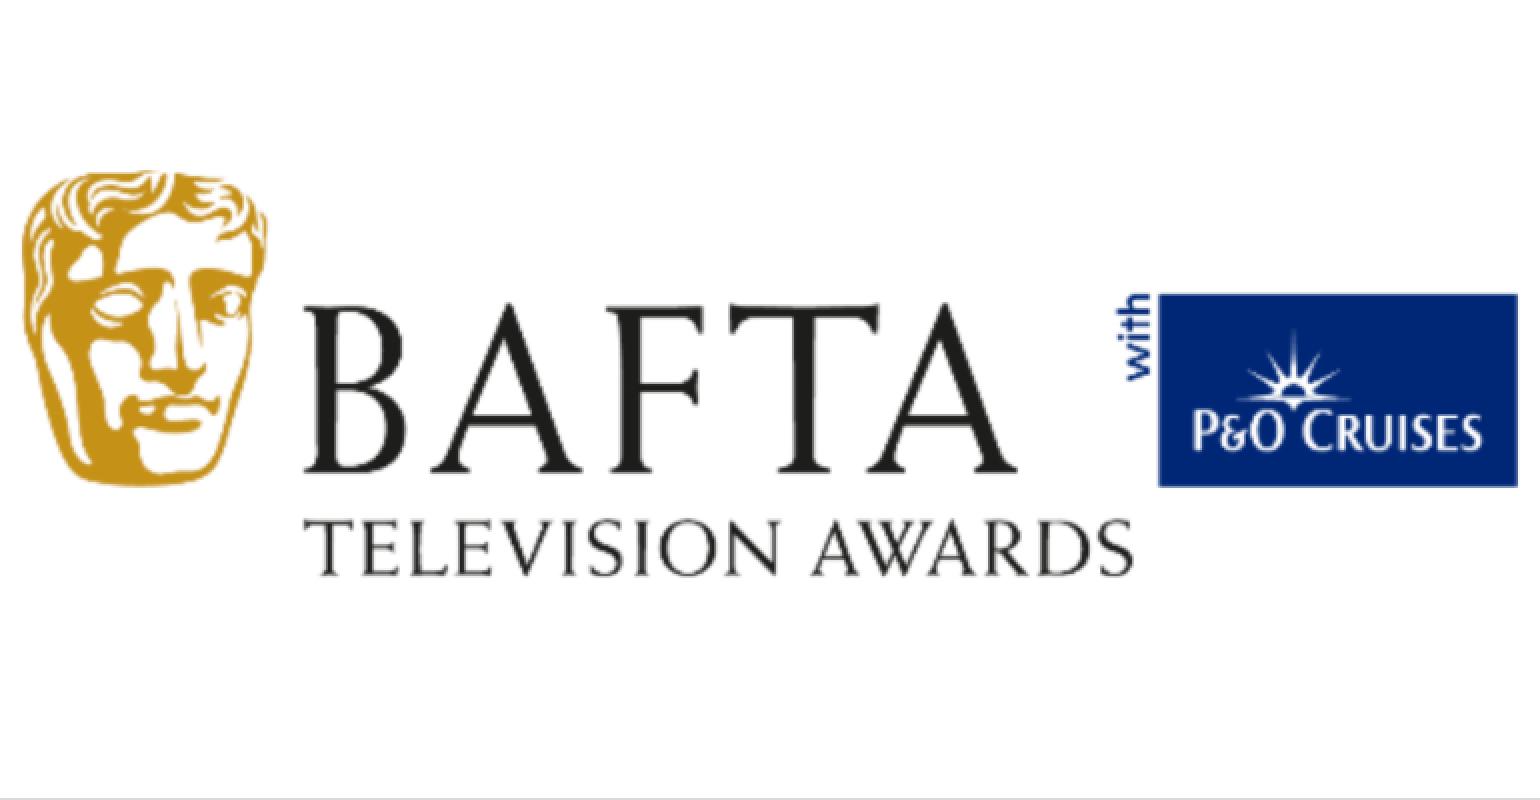 P&O named headline sponsor of BAFTA TV Awards Seatrade Cruise News